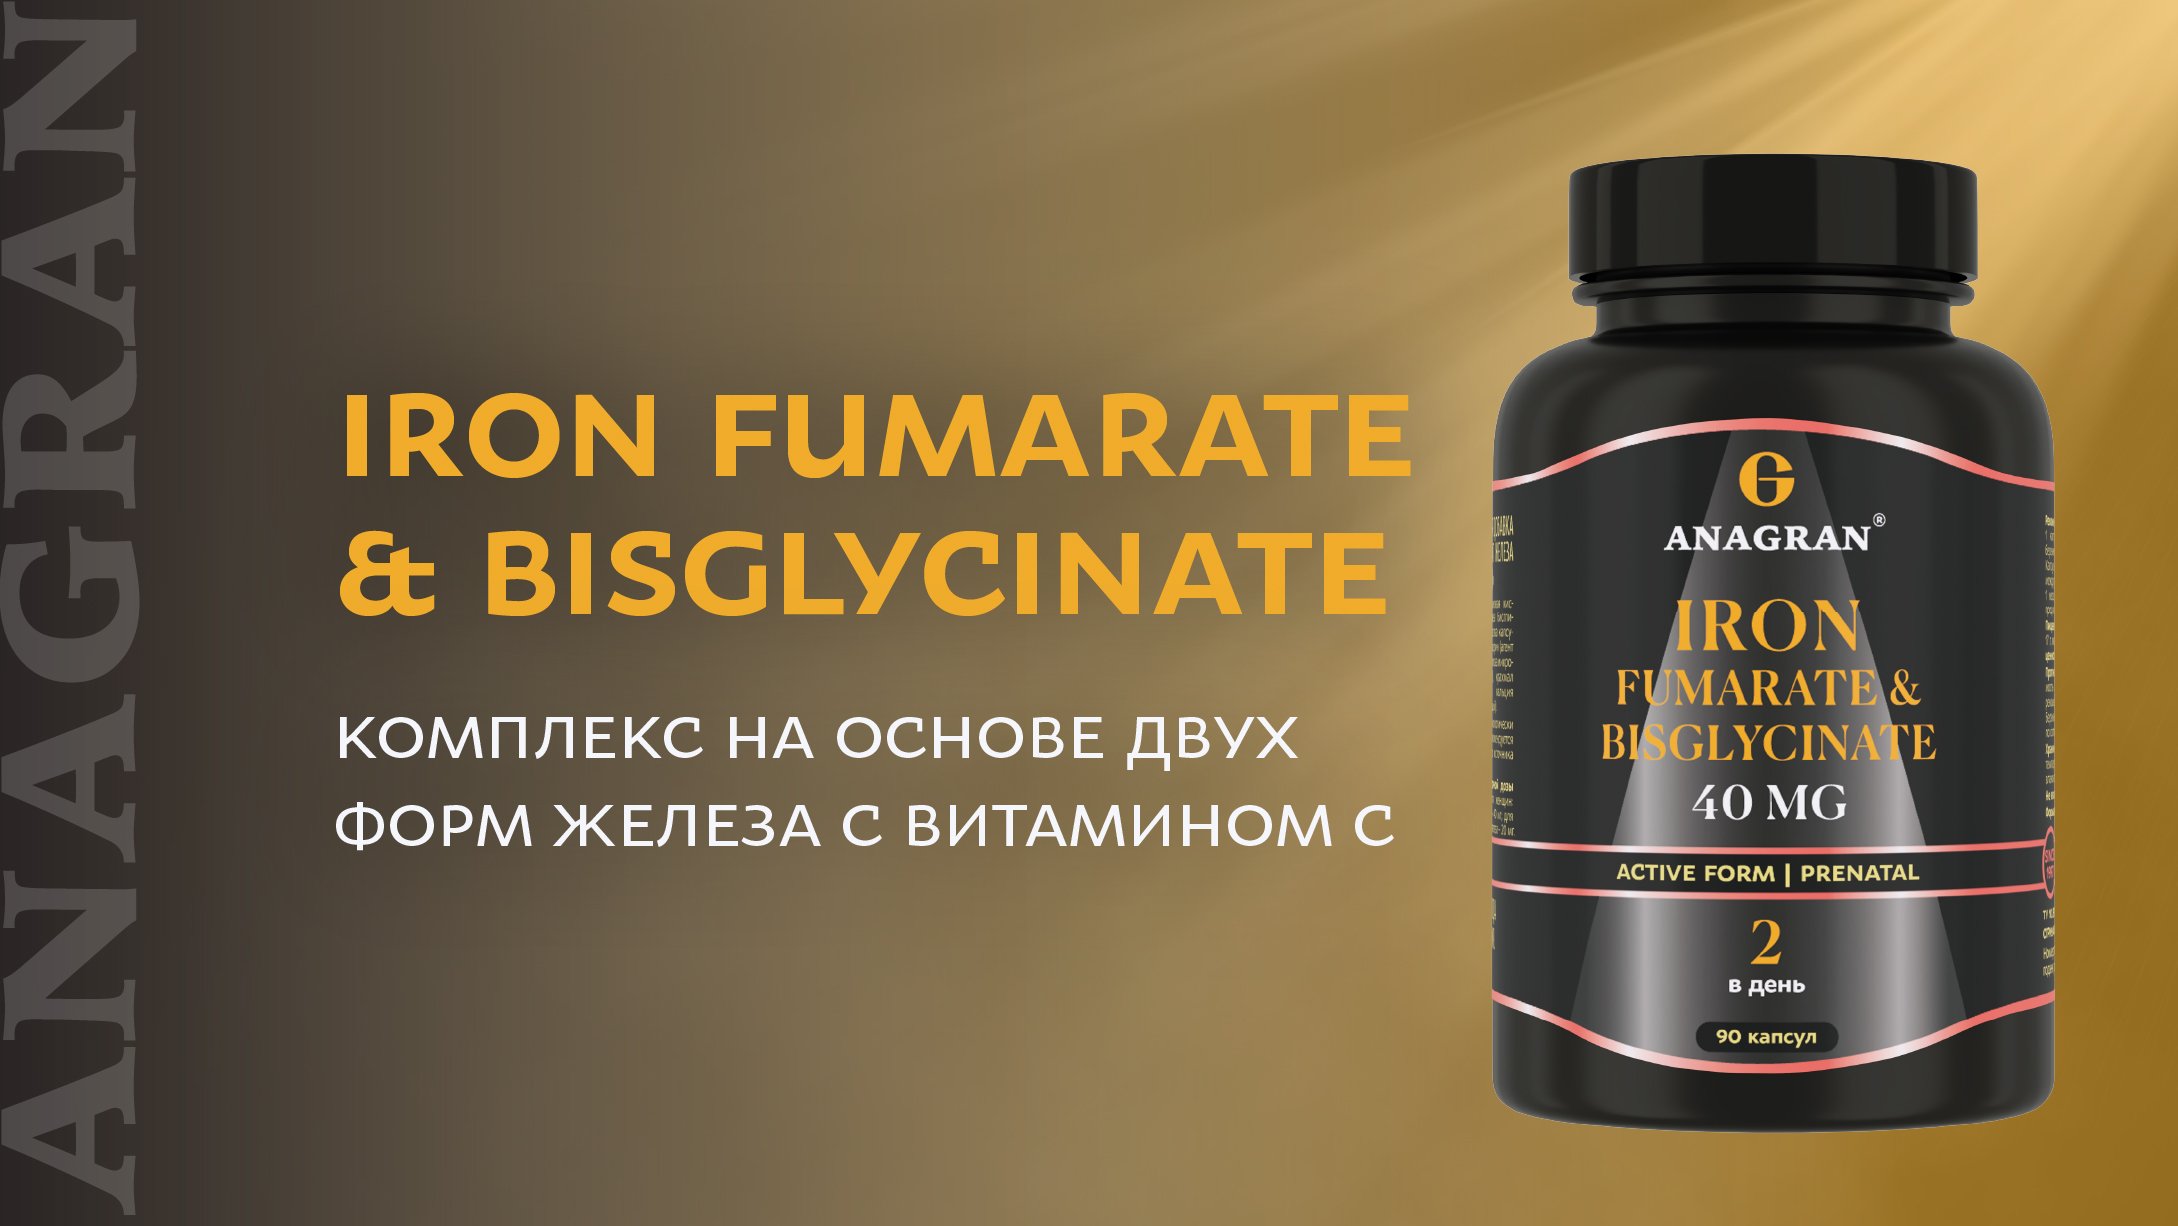 Iron fumarate & bisglycinate – комплекс на основе двух форм железа с витамином С